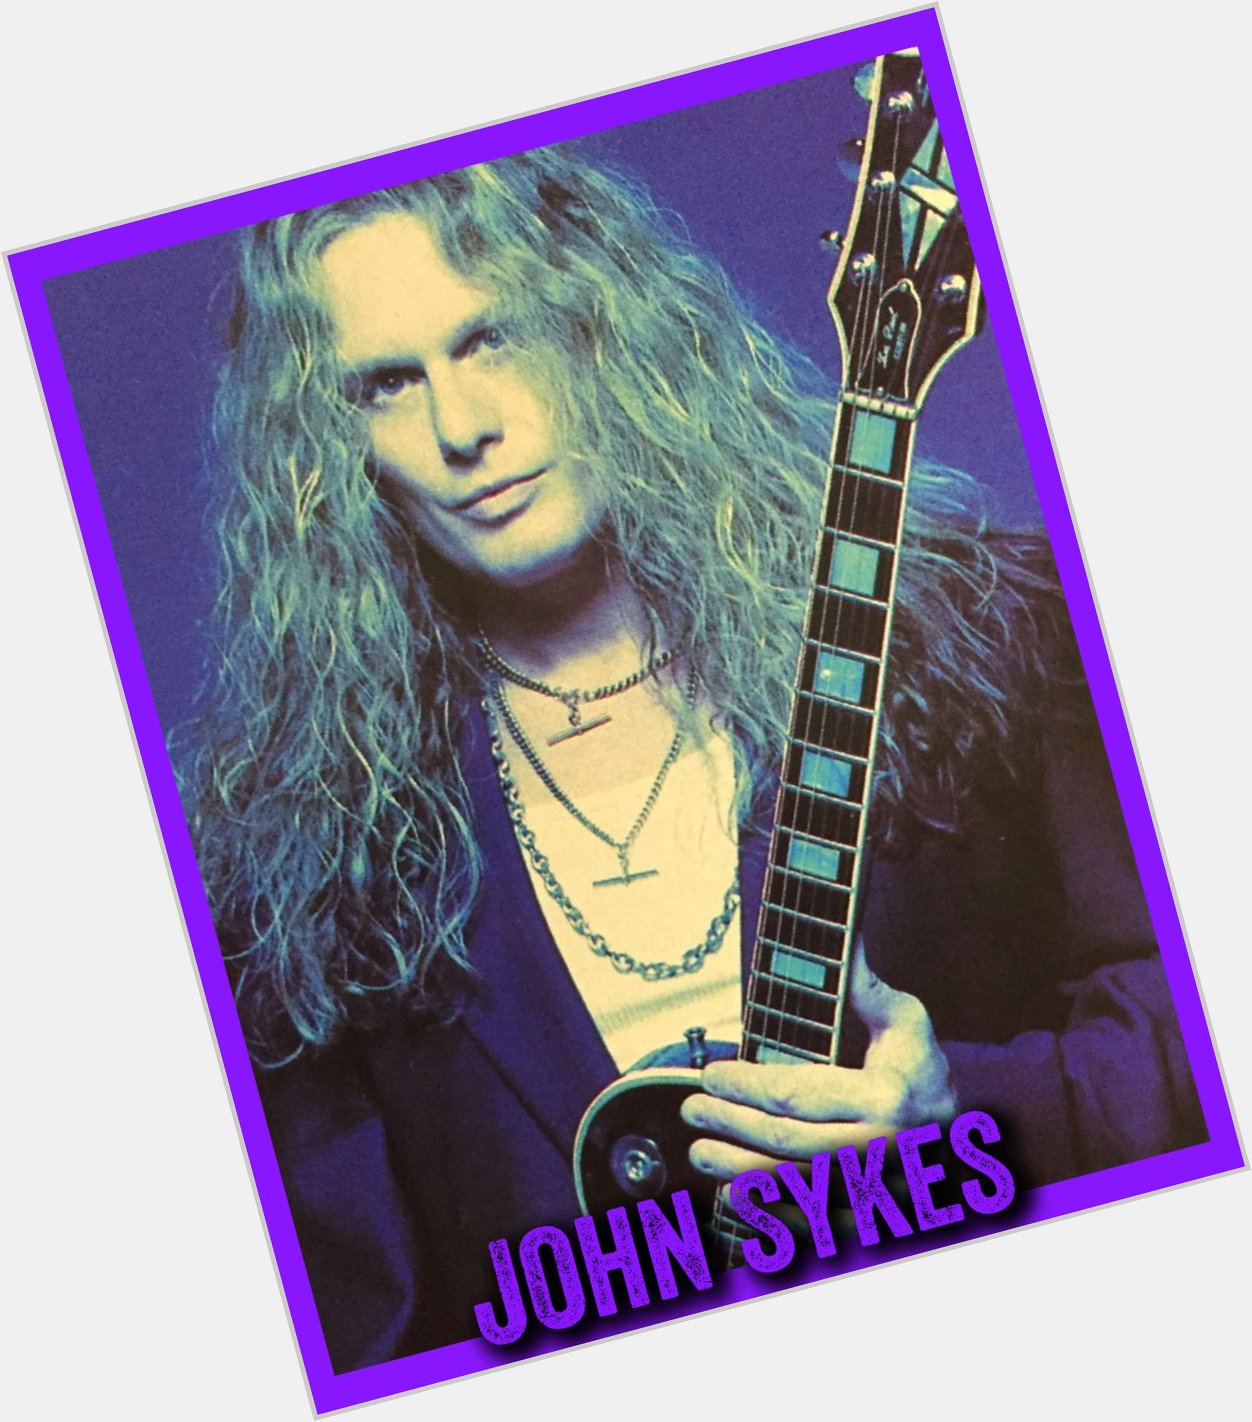 Happy Birthday John Sykes
Guitarist Whitesnake, Thin Lizzy, Tygers of Pan Tang
July 29, 1959 Reading, England 